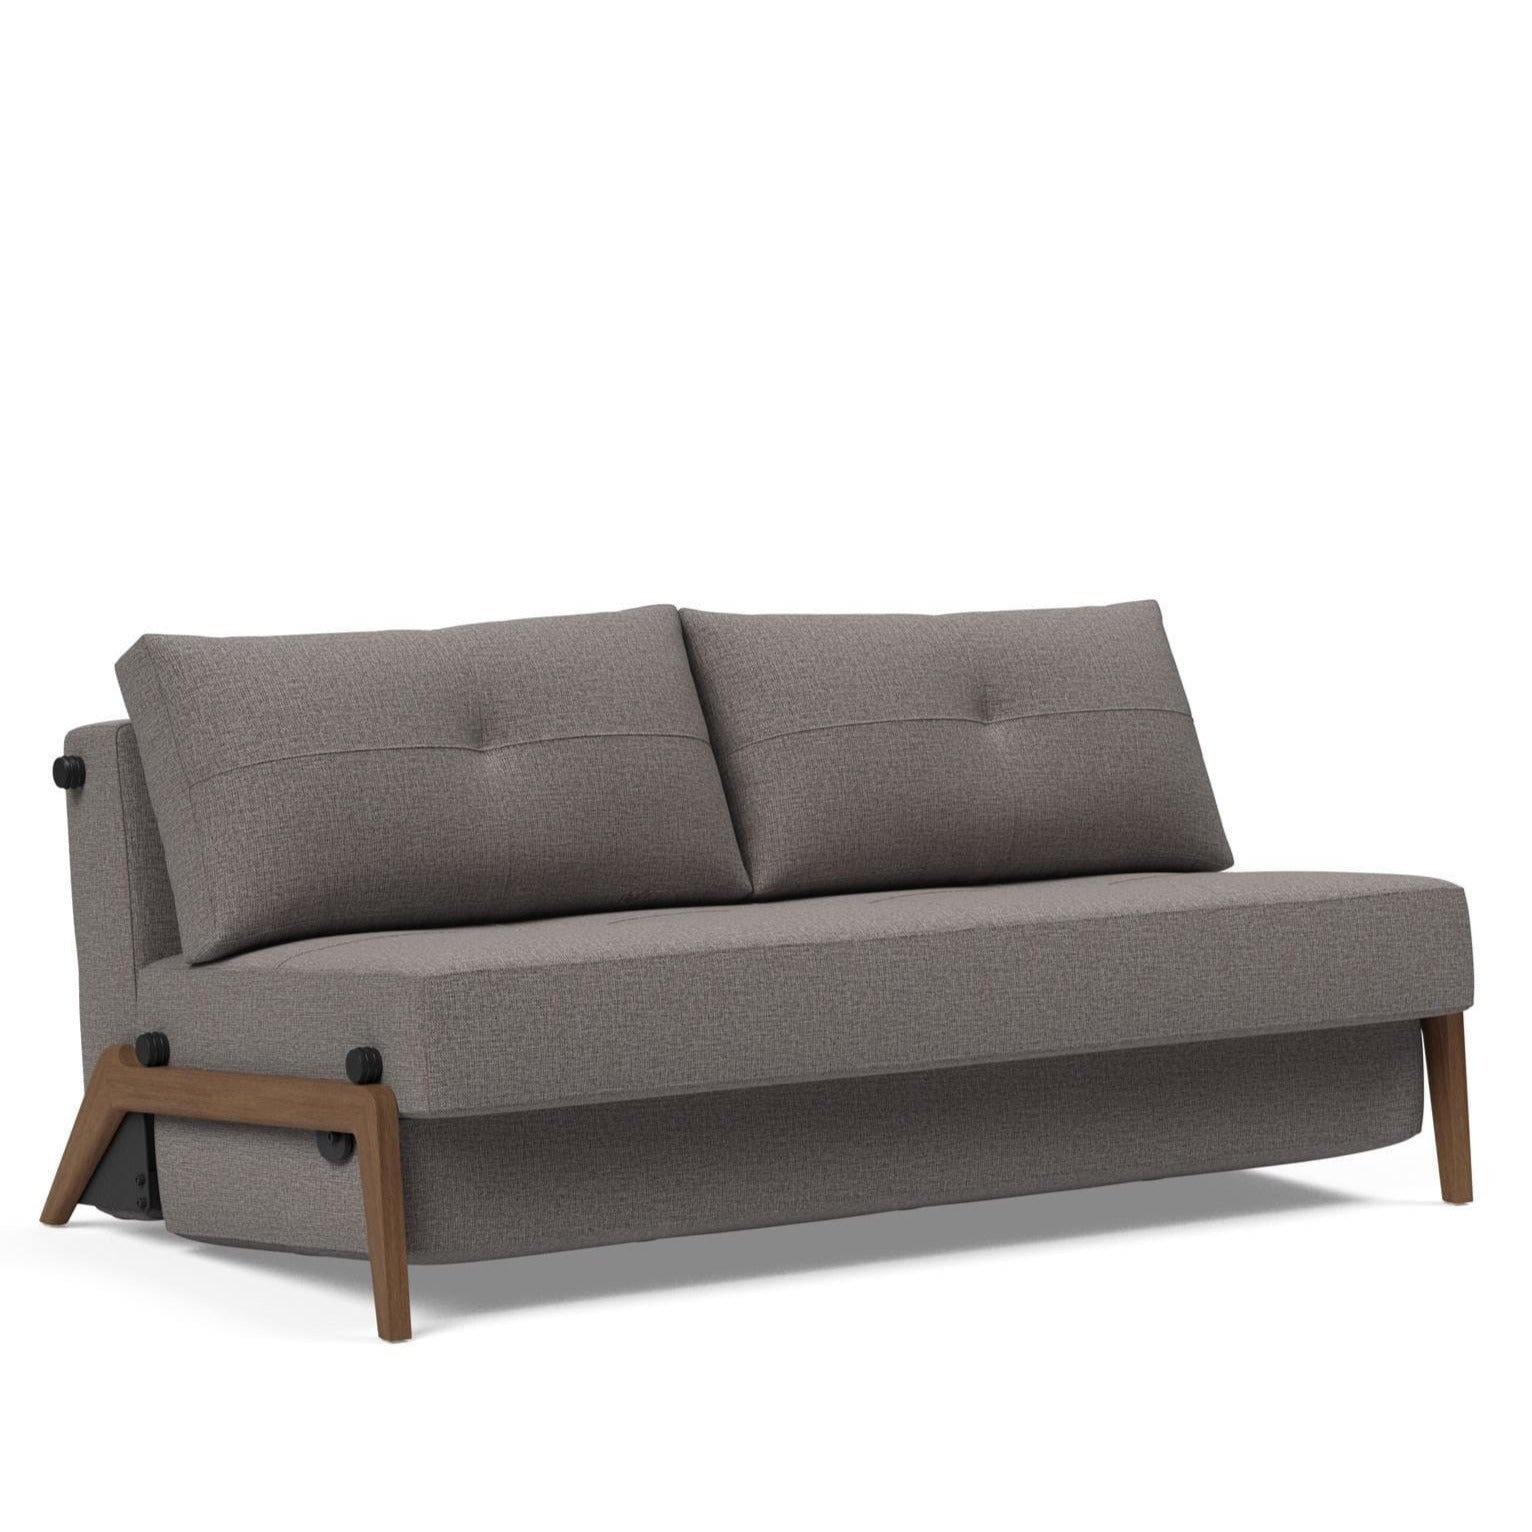 at fortsætte fredelig damp Innovation Cubed Queen Size Sofa Bed With Dark Wood Legs - New York |  Jensen-Lewis